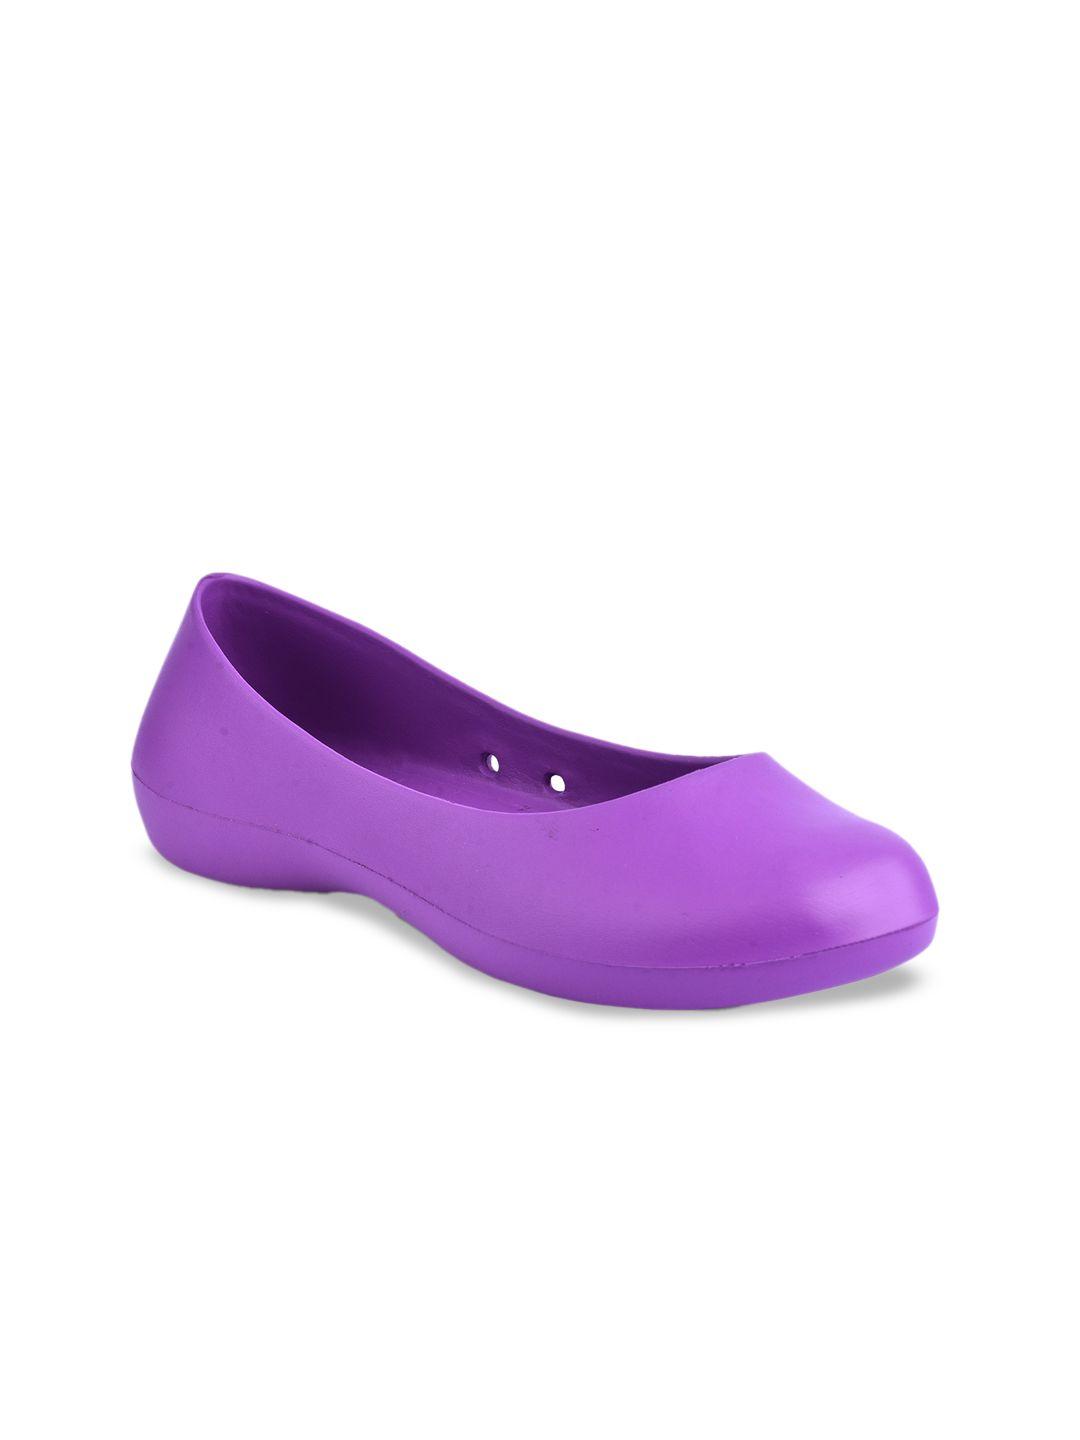 Paragon Women Purple Ballerinas Flats